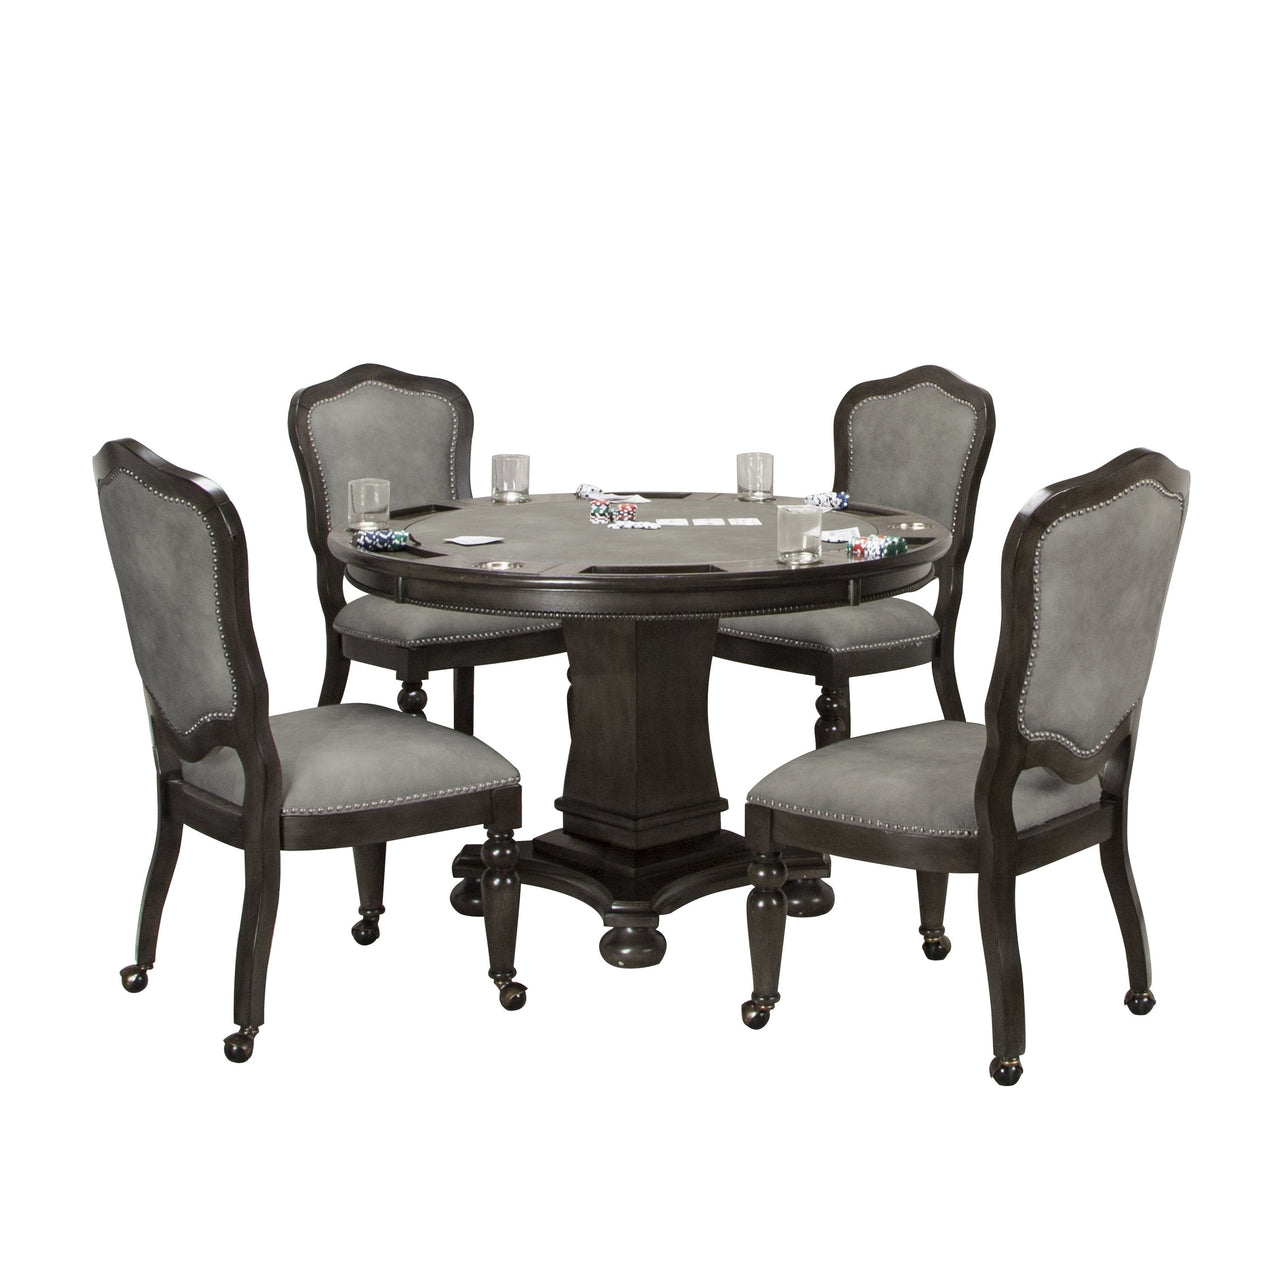 Poker & Dining Chair Set Vegas by Sunset-AMERICANA-POKER-TABLES